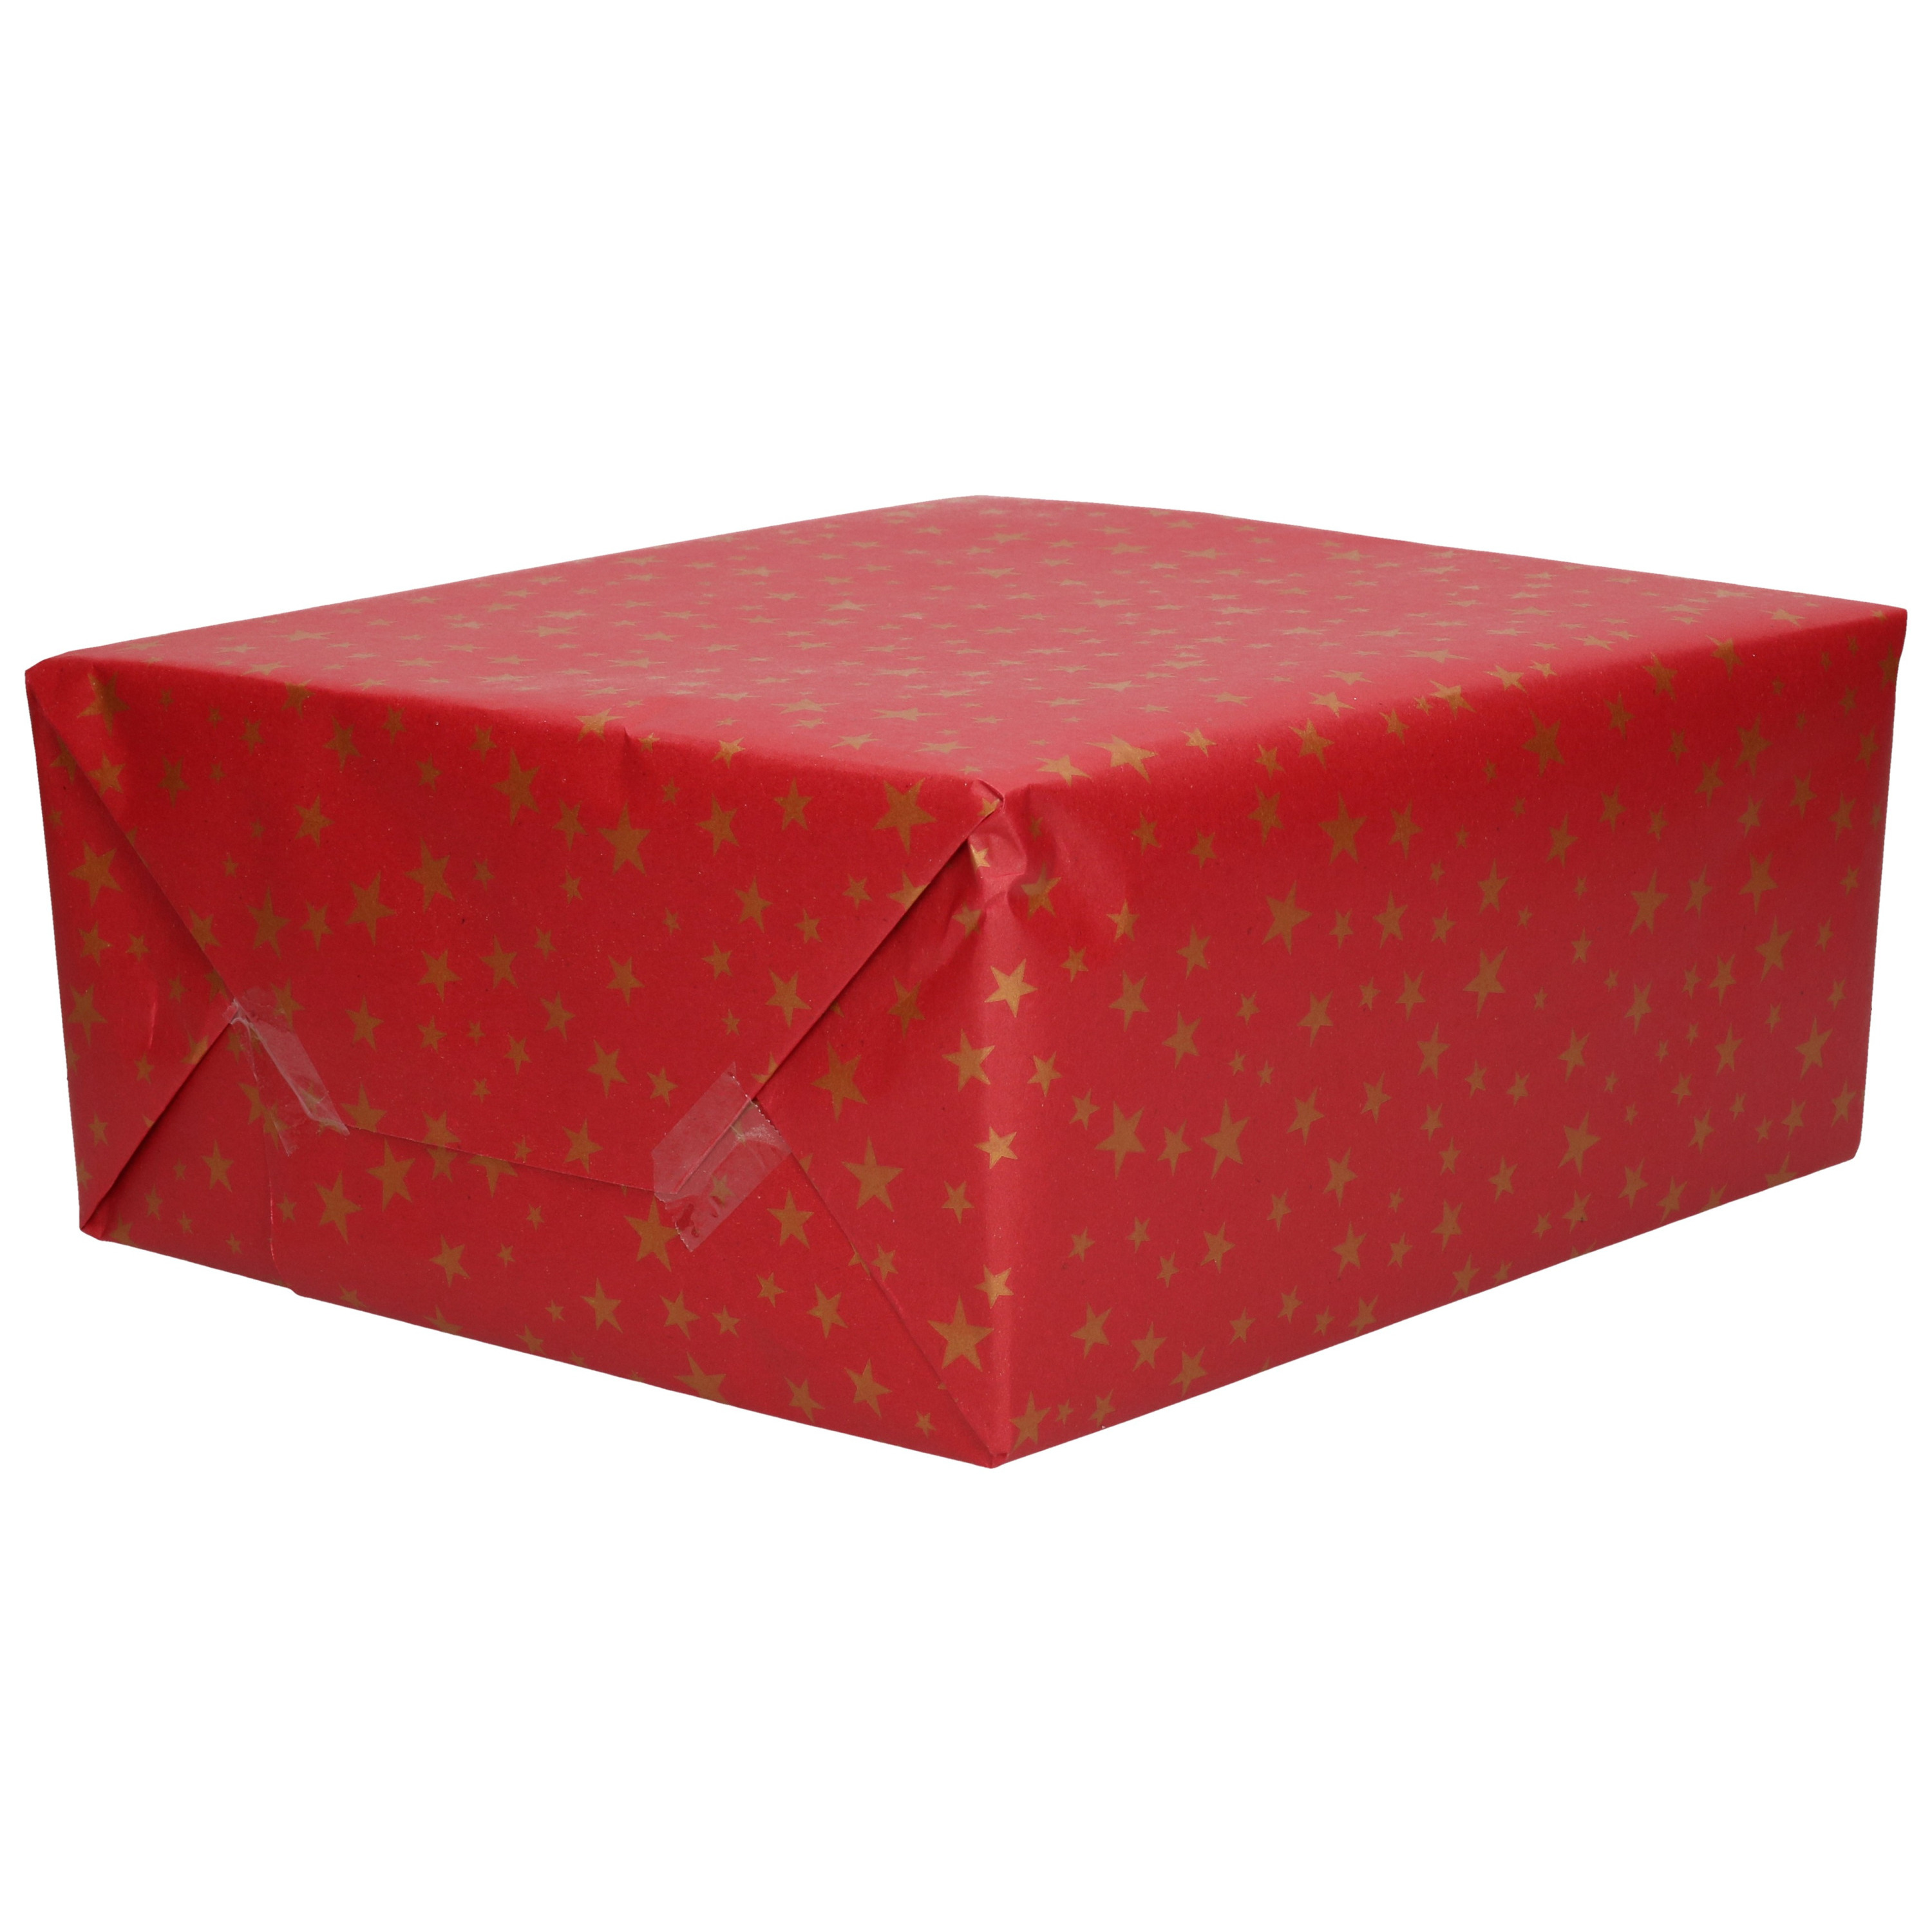 1x Rollen Kerst inpakpapier/cadeaupapier bordeaux rood 2,5 x 0,7 meter